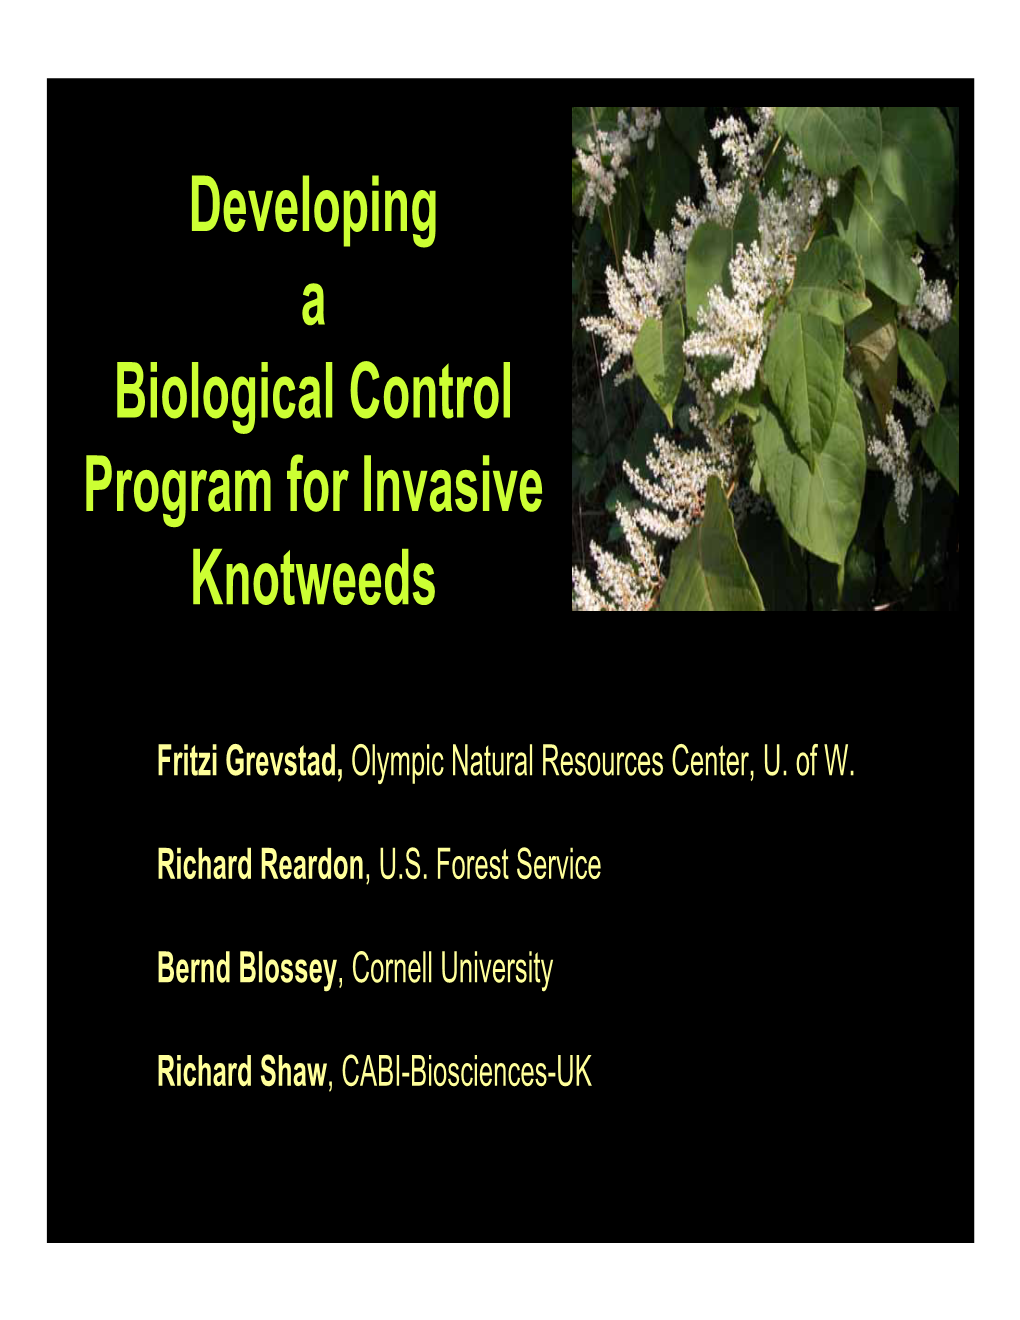 Developing a Biological Control Program for Invasive Knotweeds